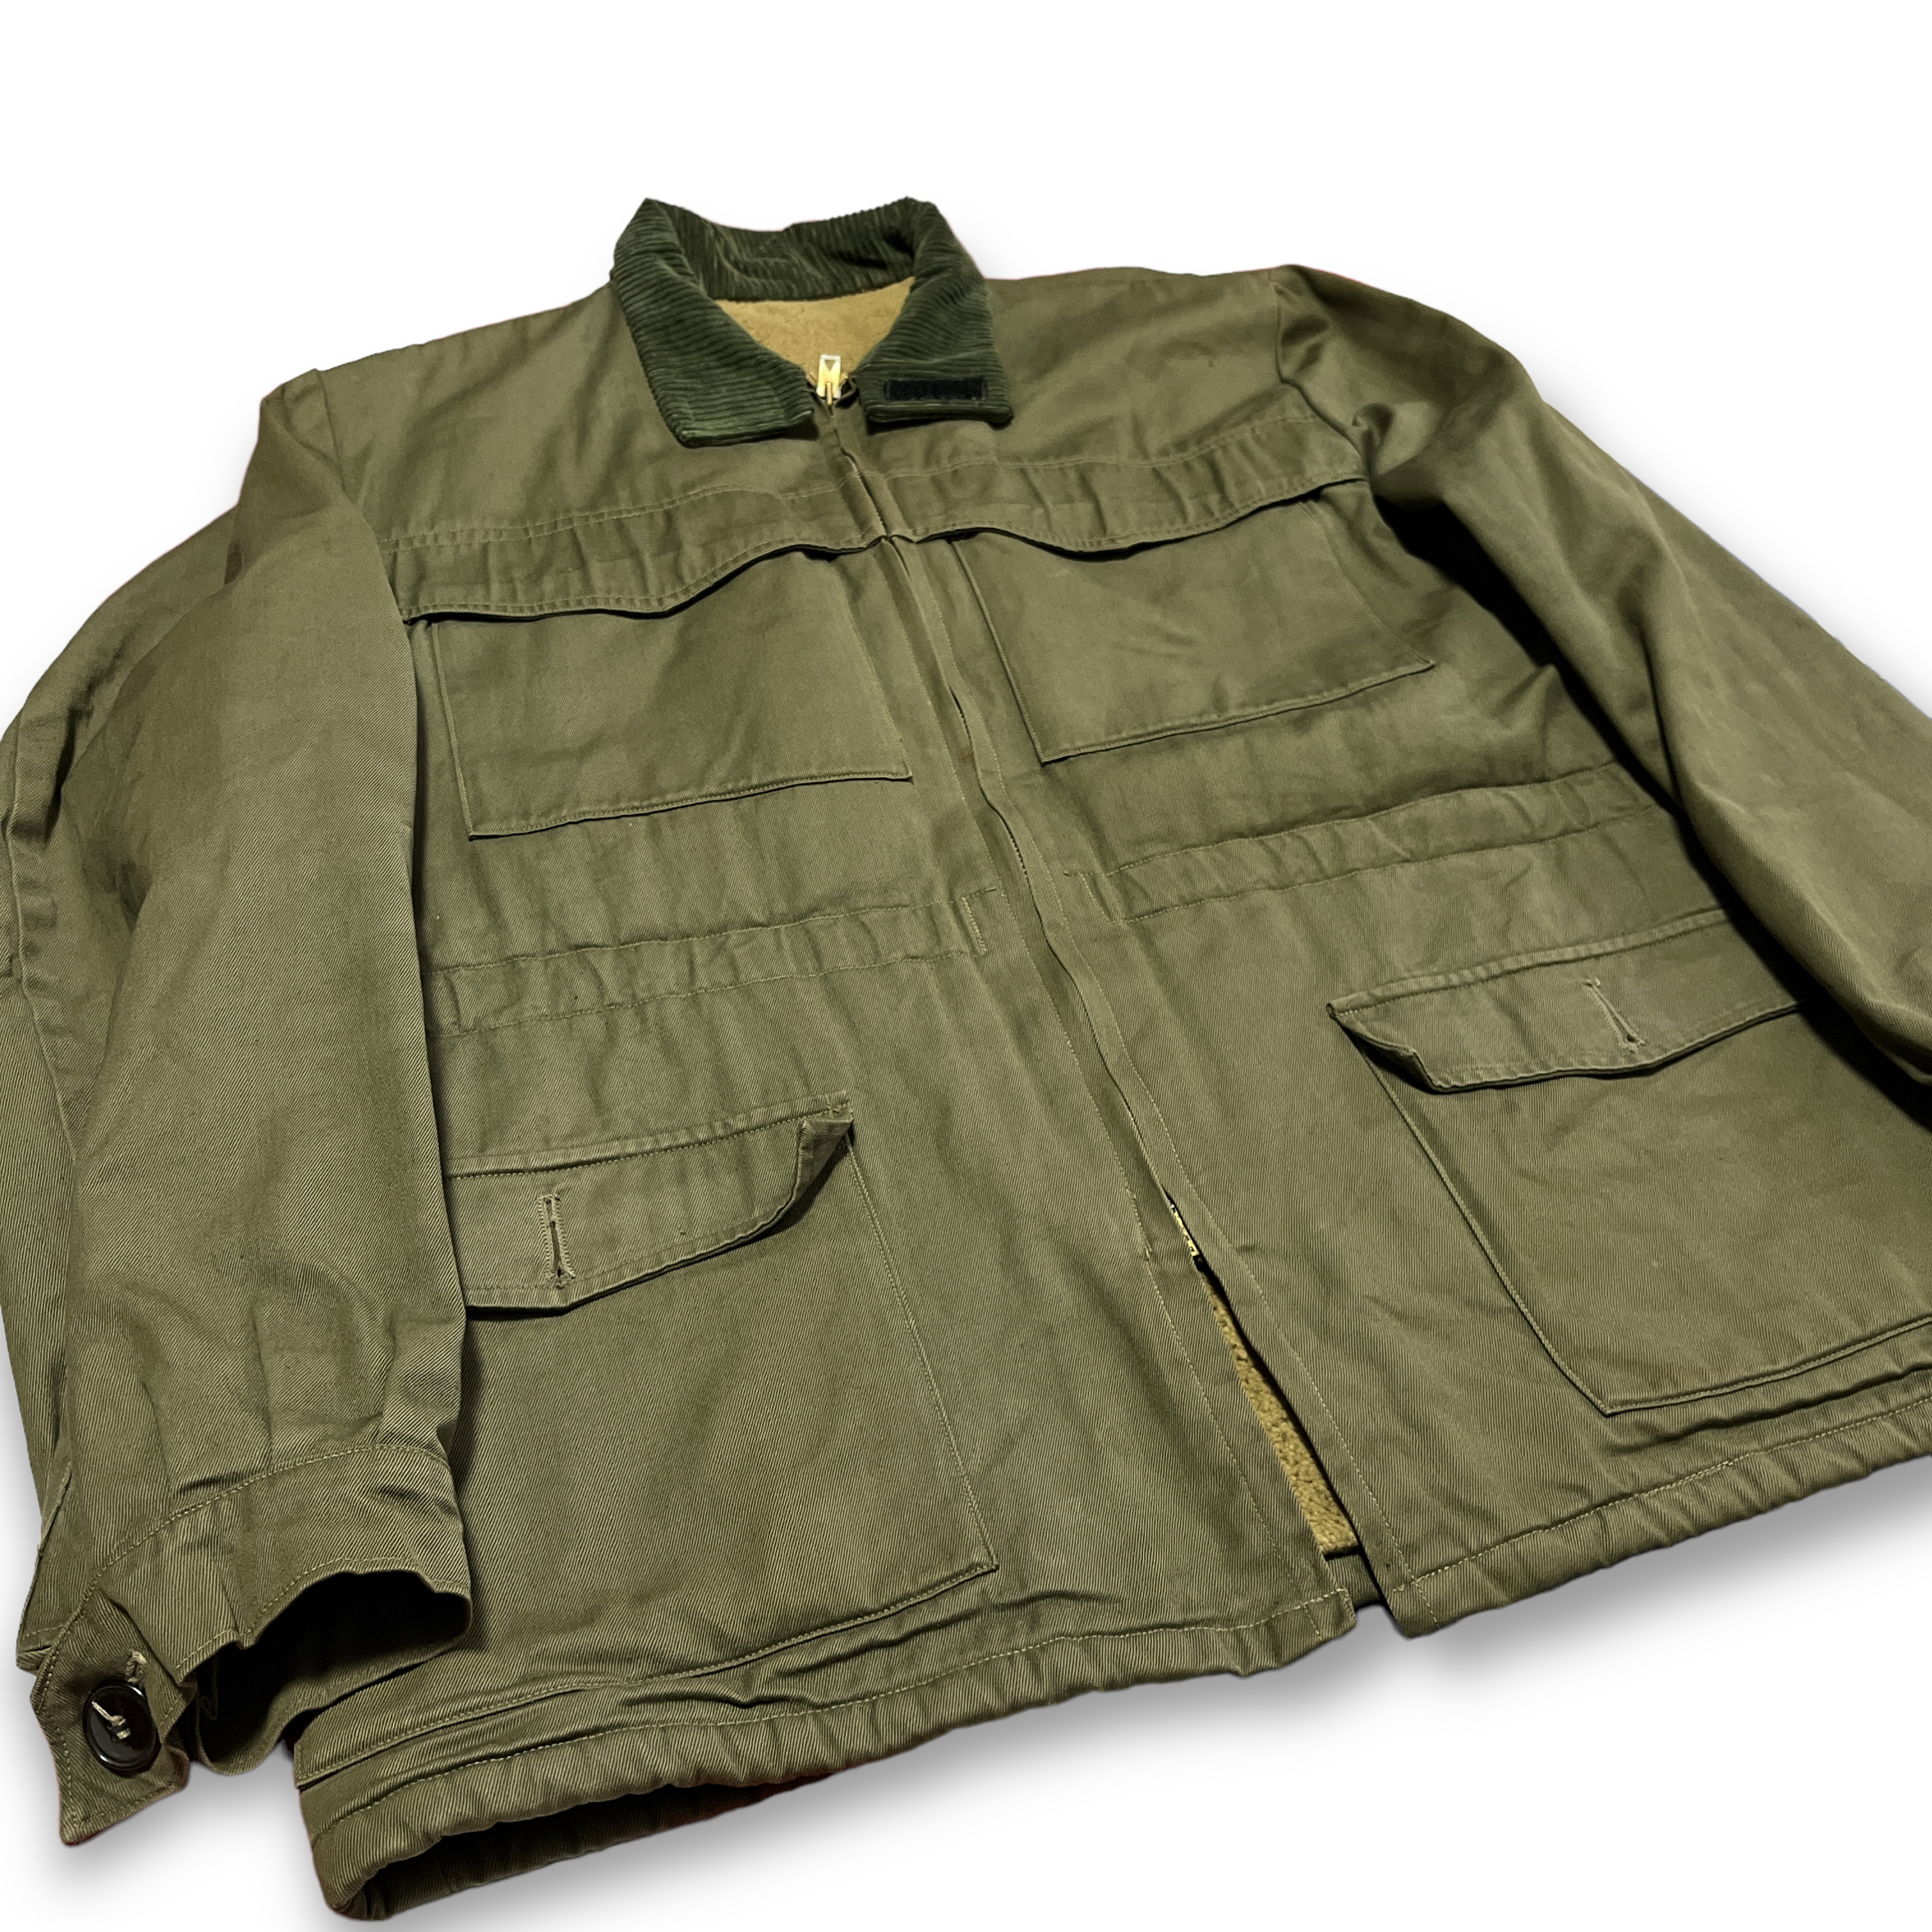 EURO vintage s〜 French hunting jacket ユーロ ビンテージ